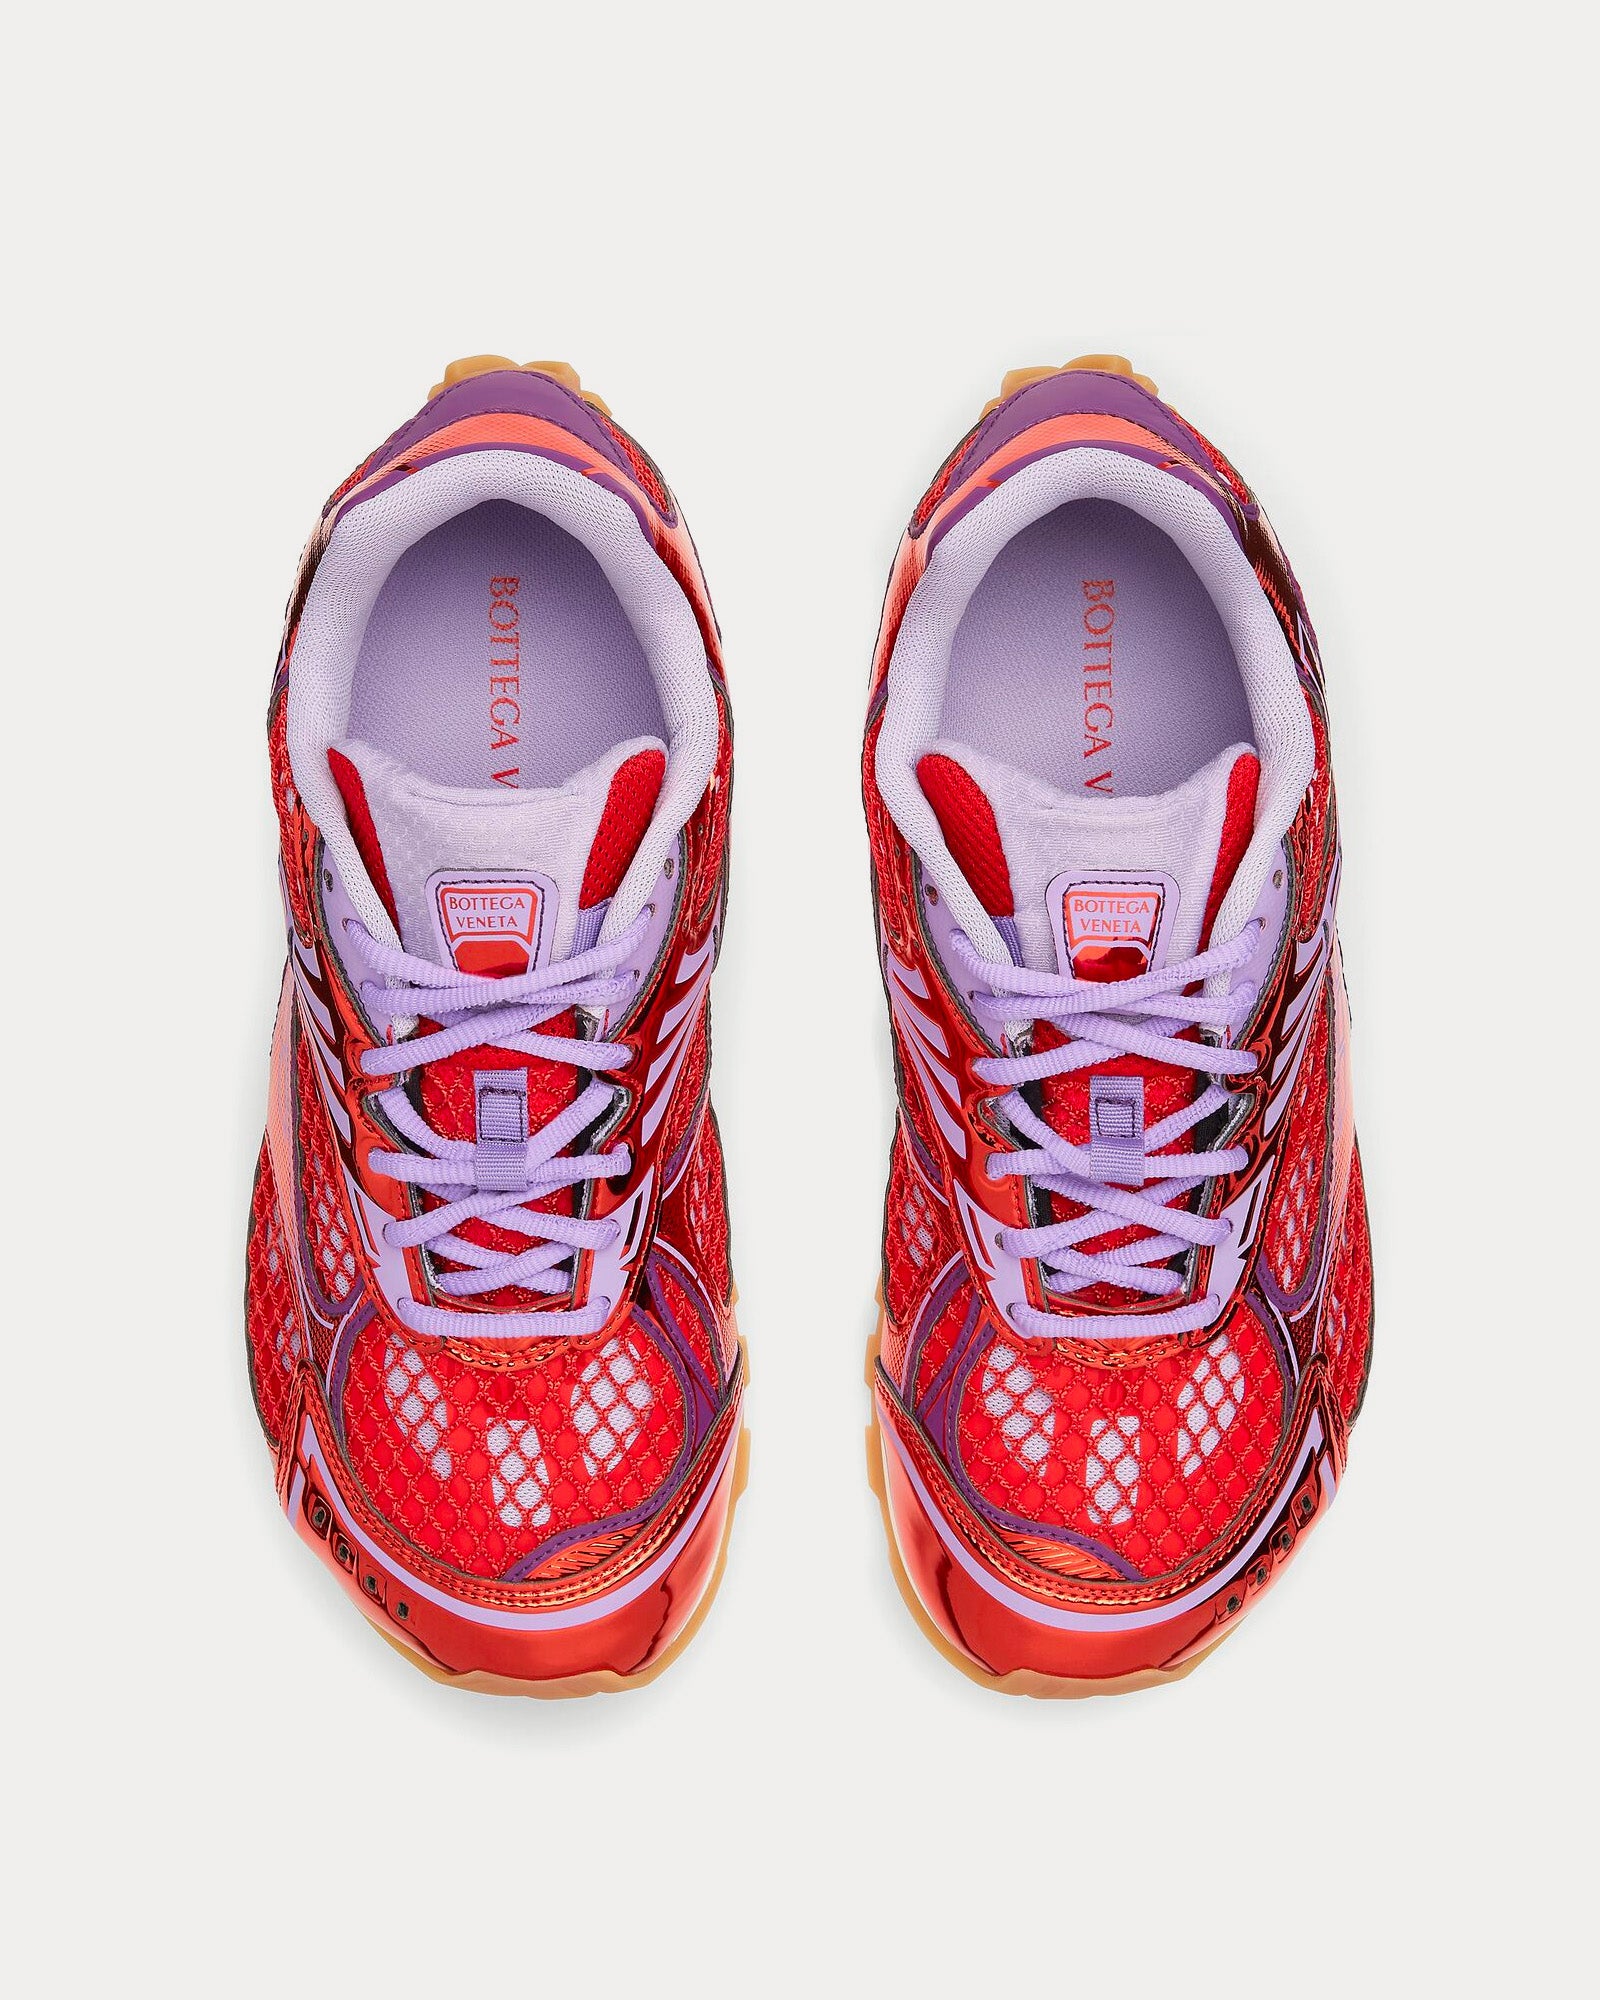 Bottega Veneta - Orbit Metallic Red / Wisteria Low Top Sneakers